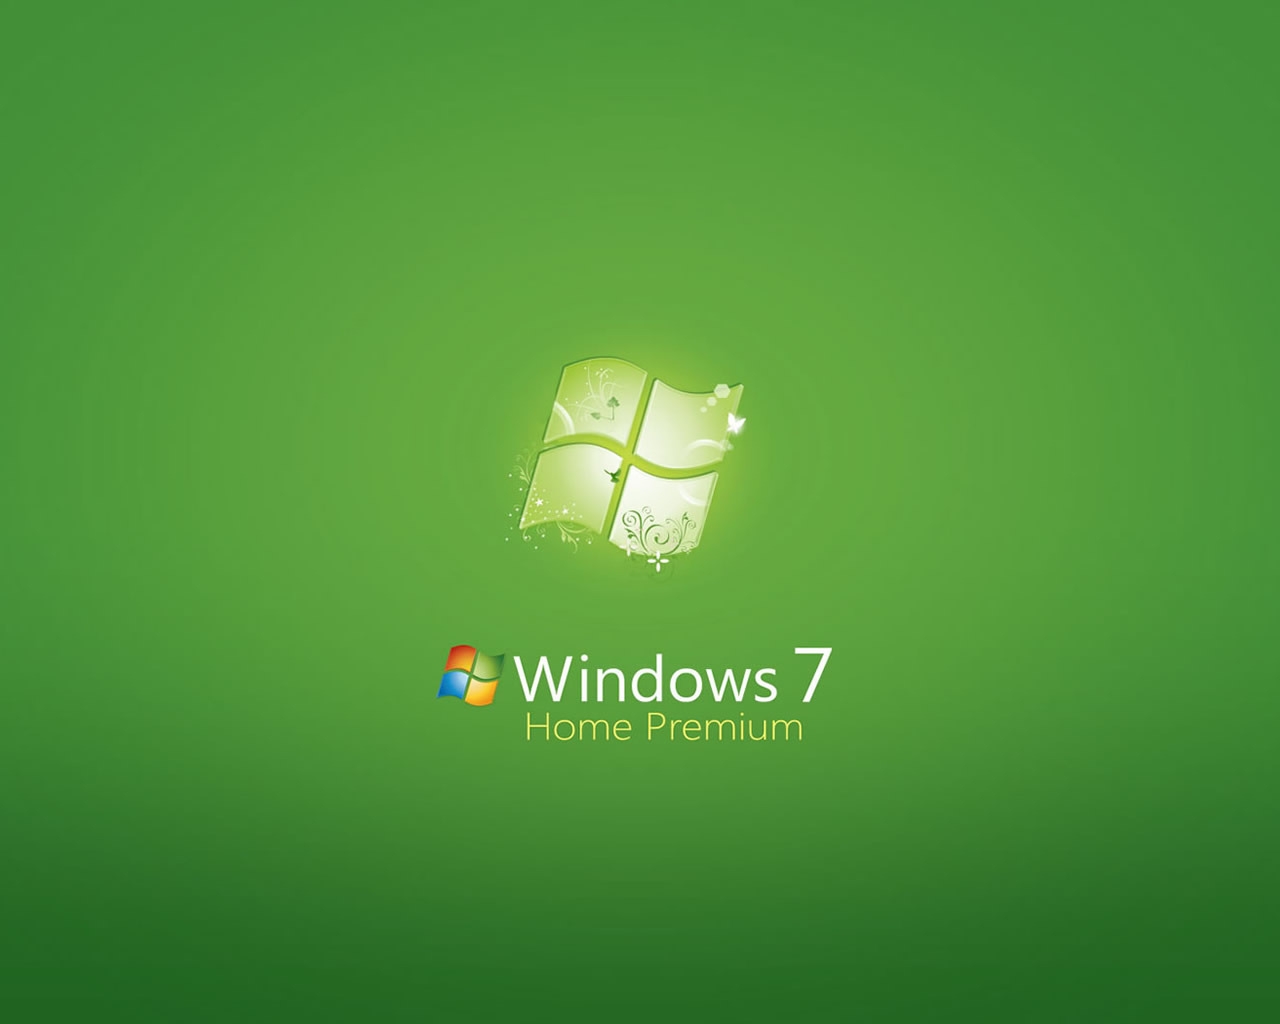 Windows 7 Home Premium Green for 1280 x 1024 resolution